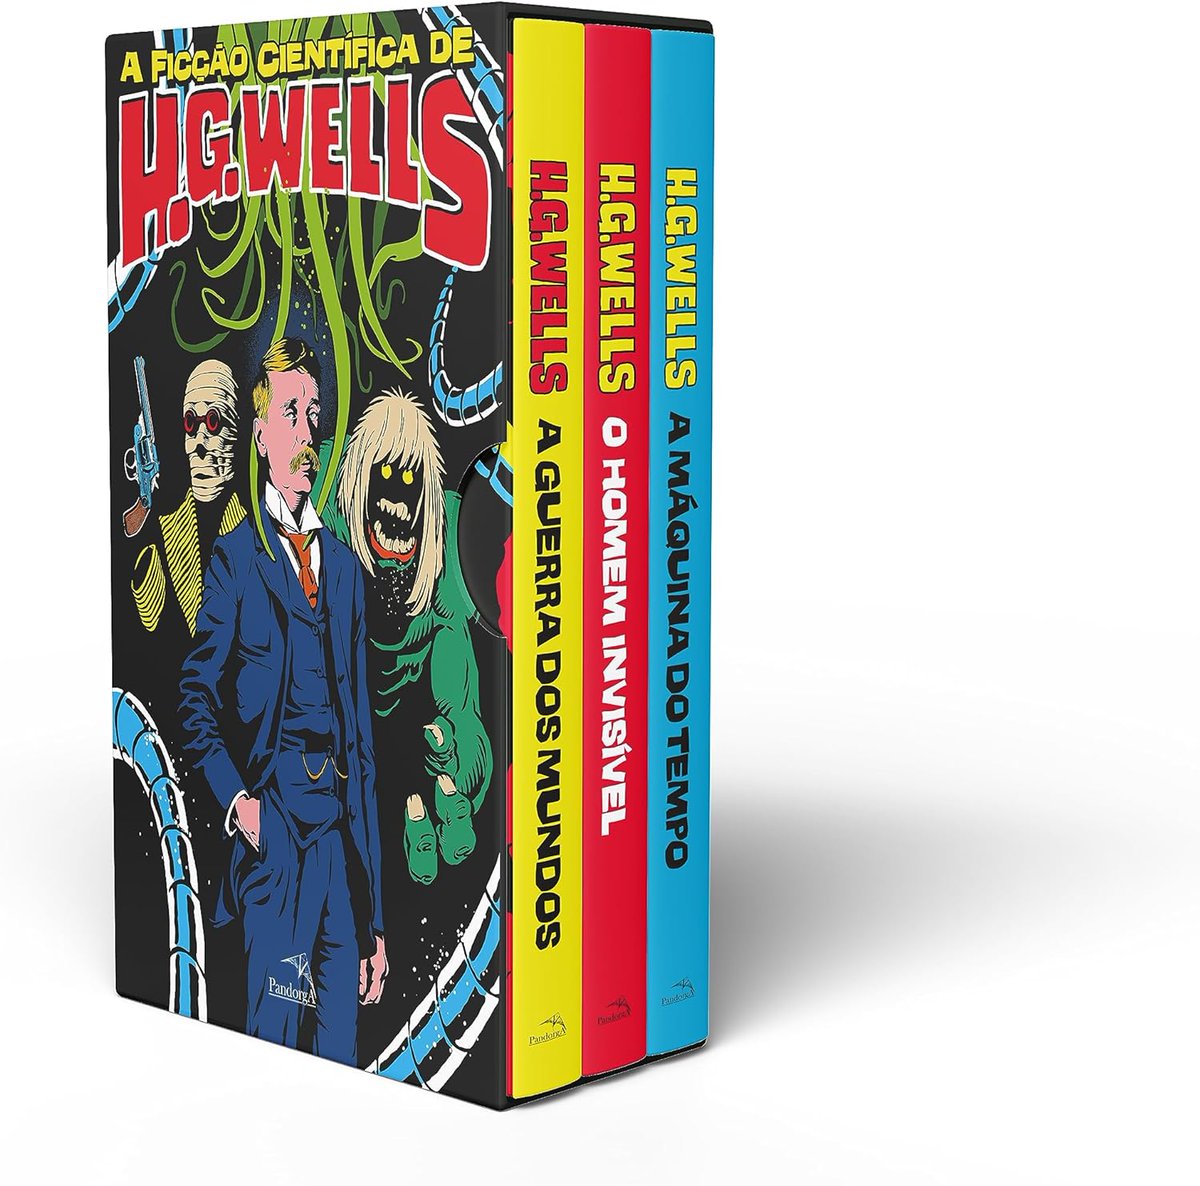 Oferta ⚡️ Amazon Box A ficção científica de H. G. Wells (R$ 39,90) 📖 amzlink.to/az0VVa5Nfy4dc